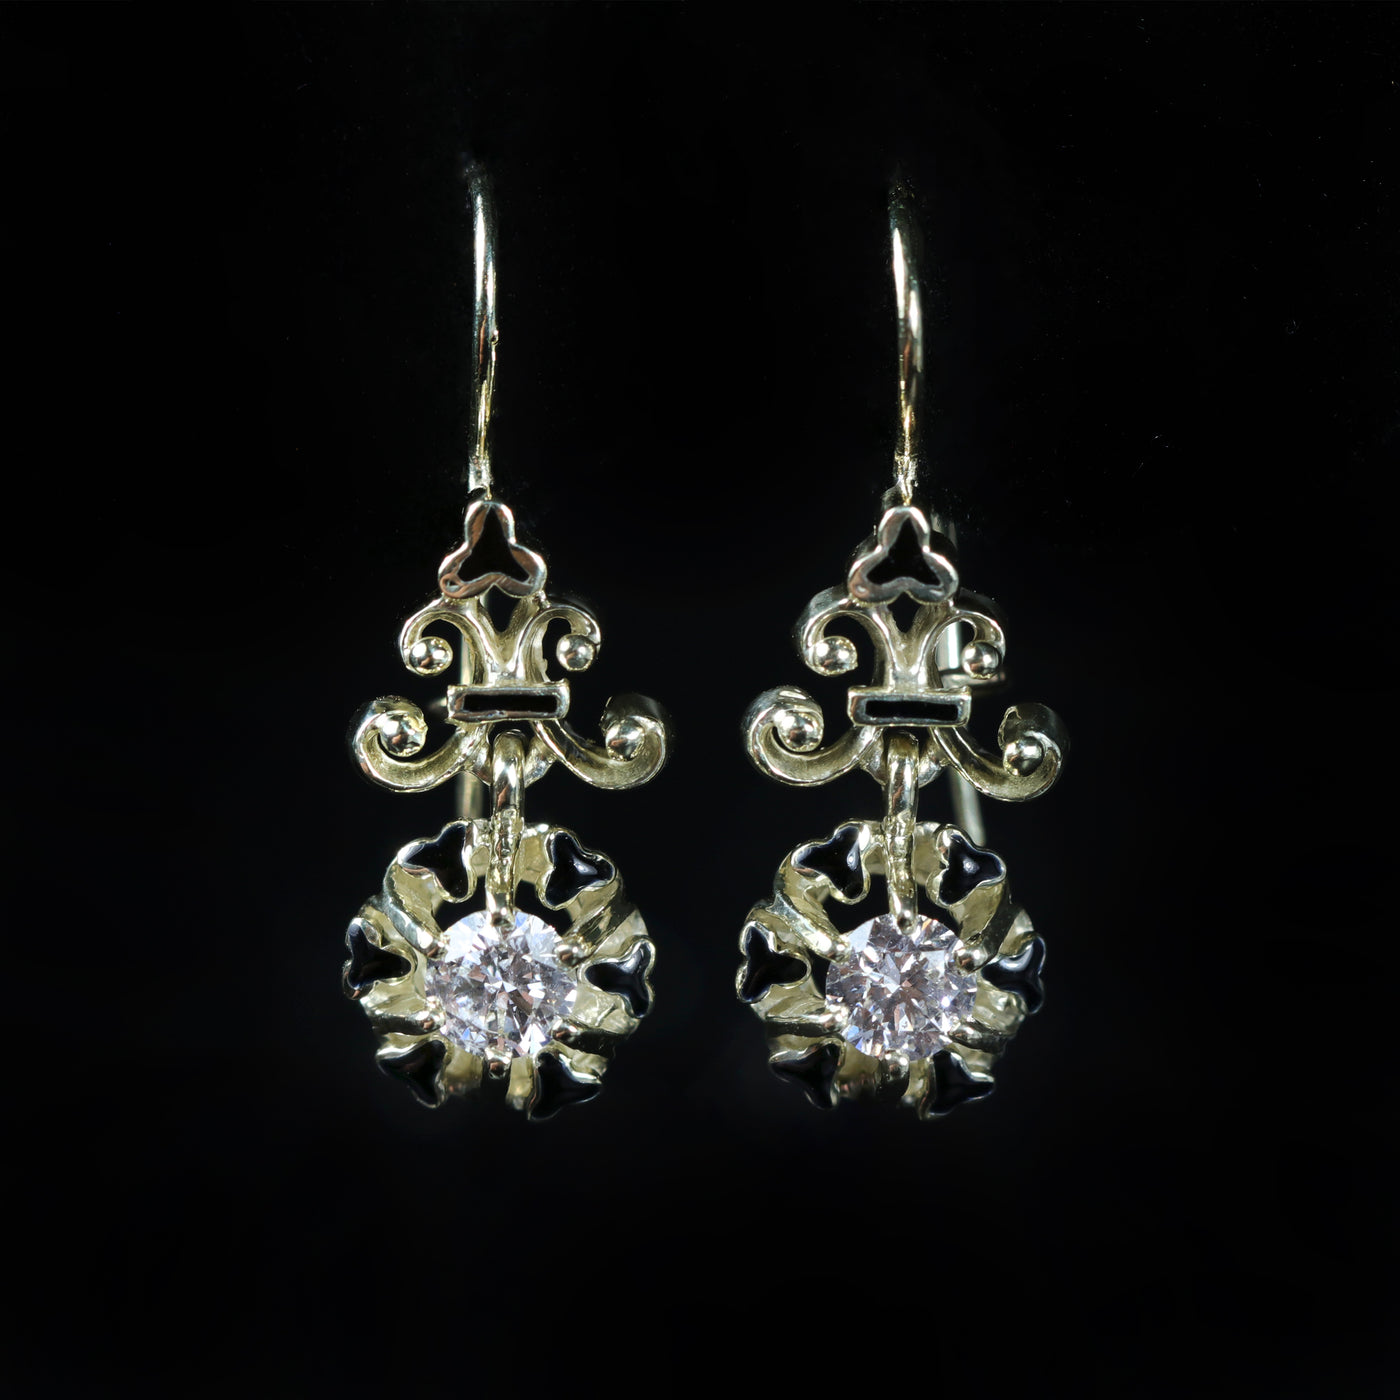 14K Green Gold 0.60 Carat Diamond And Black Enamel Earrings